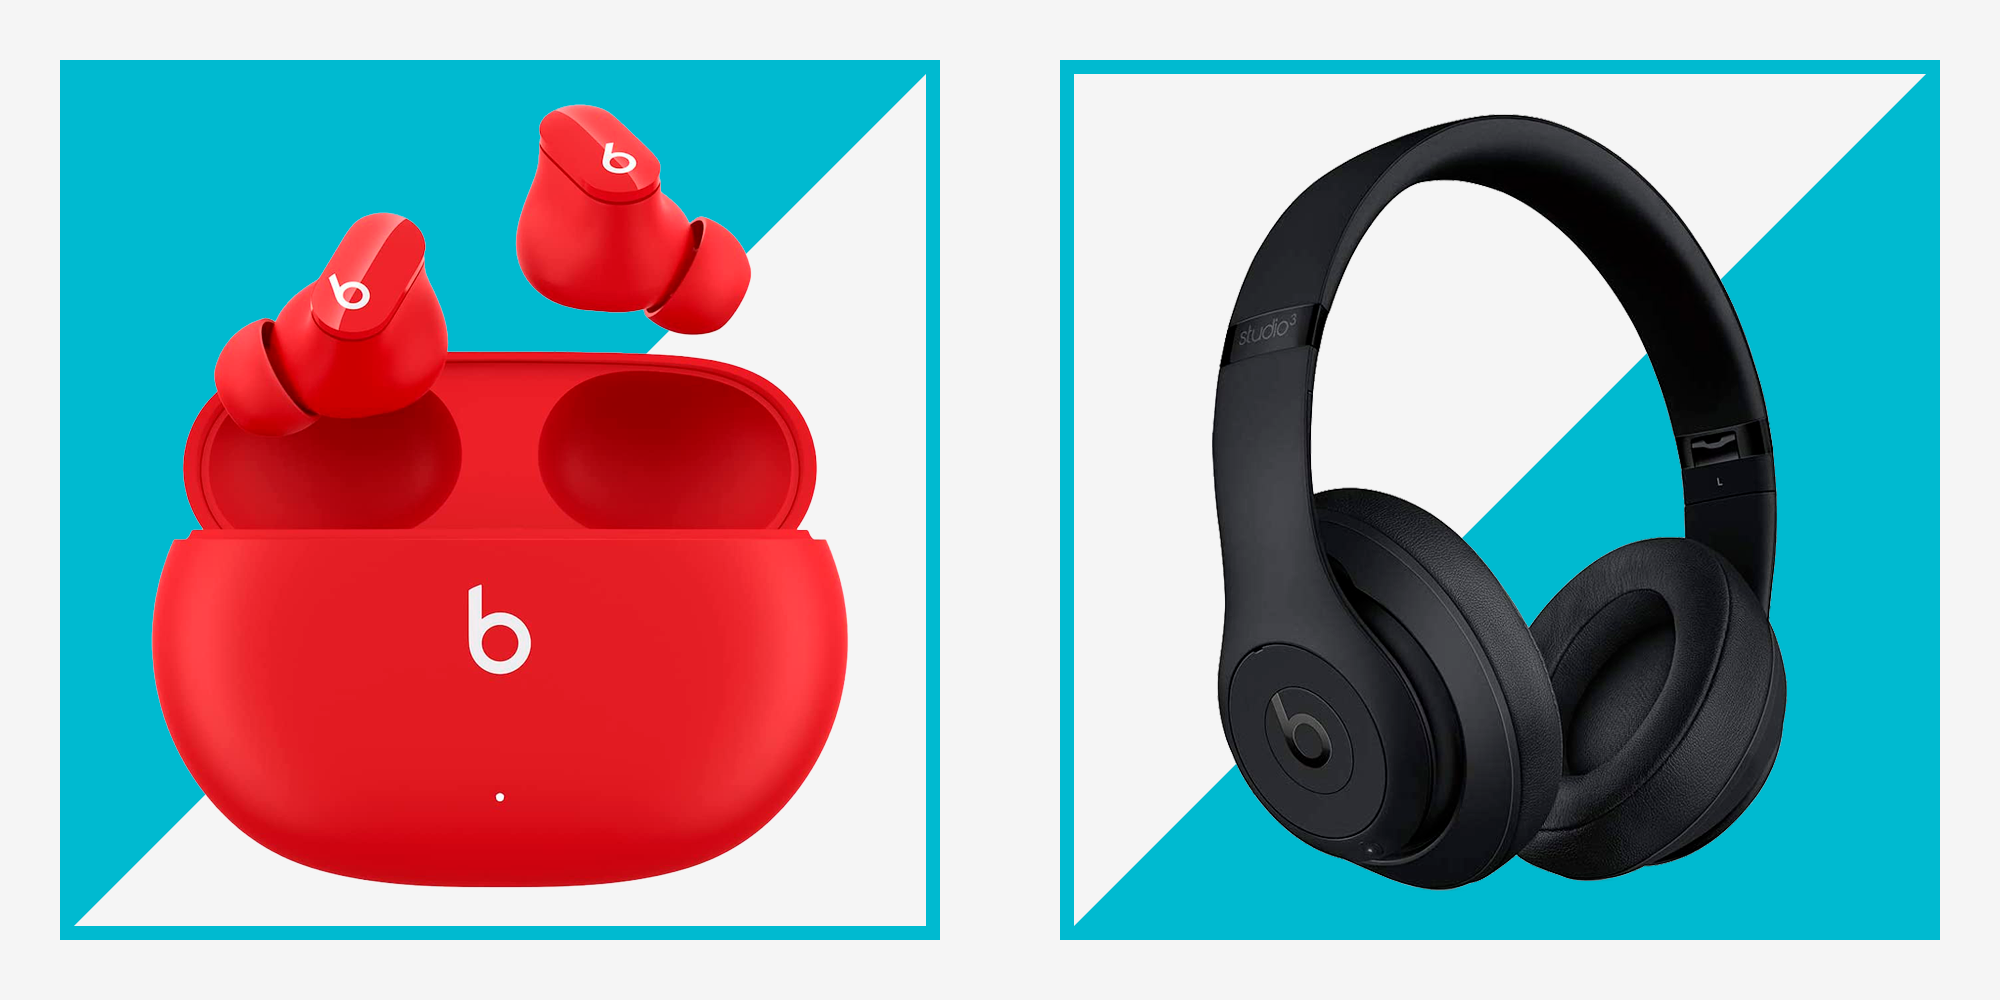 Amazon’s Having a Massive Sale on Beats Headphones Right Now